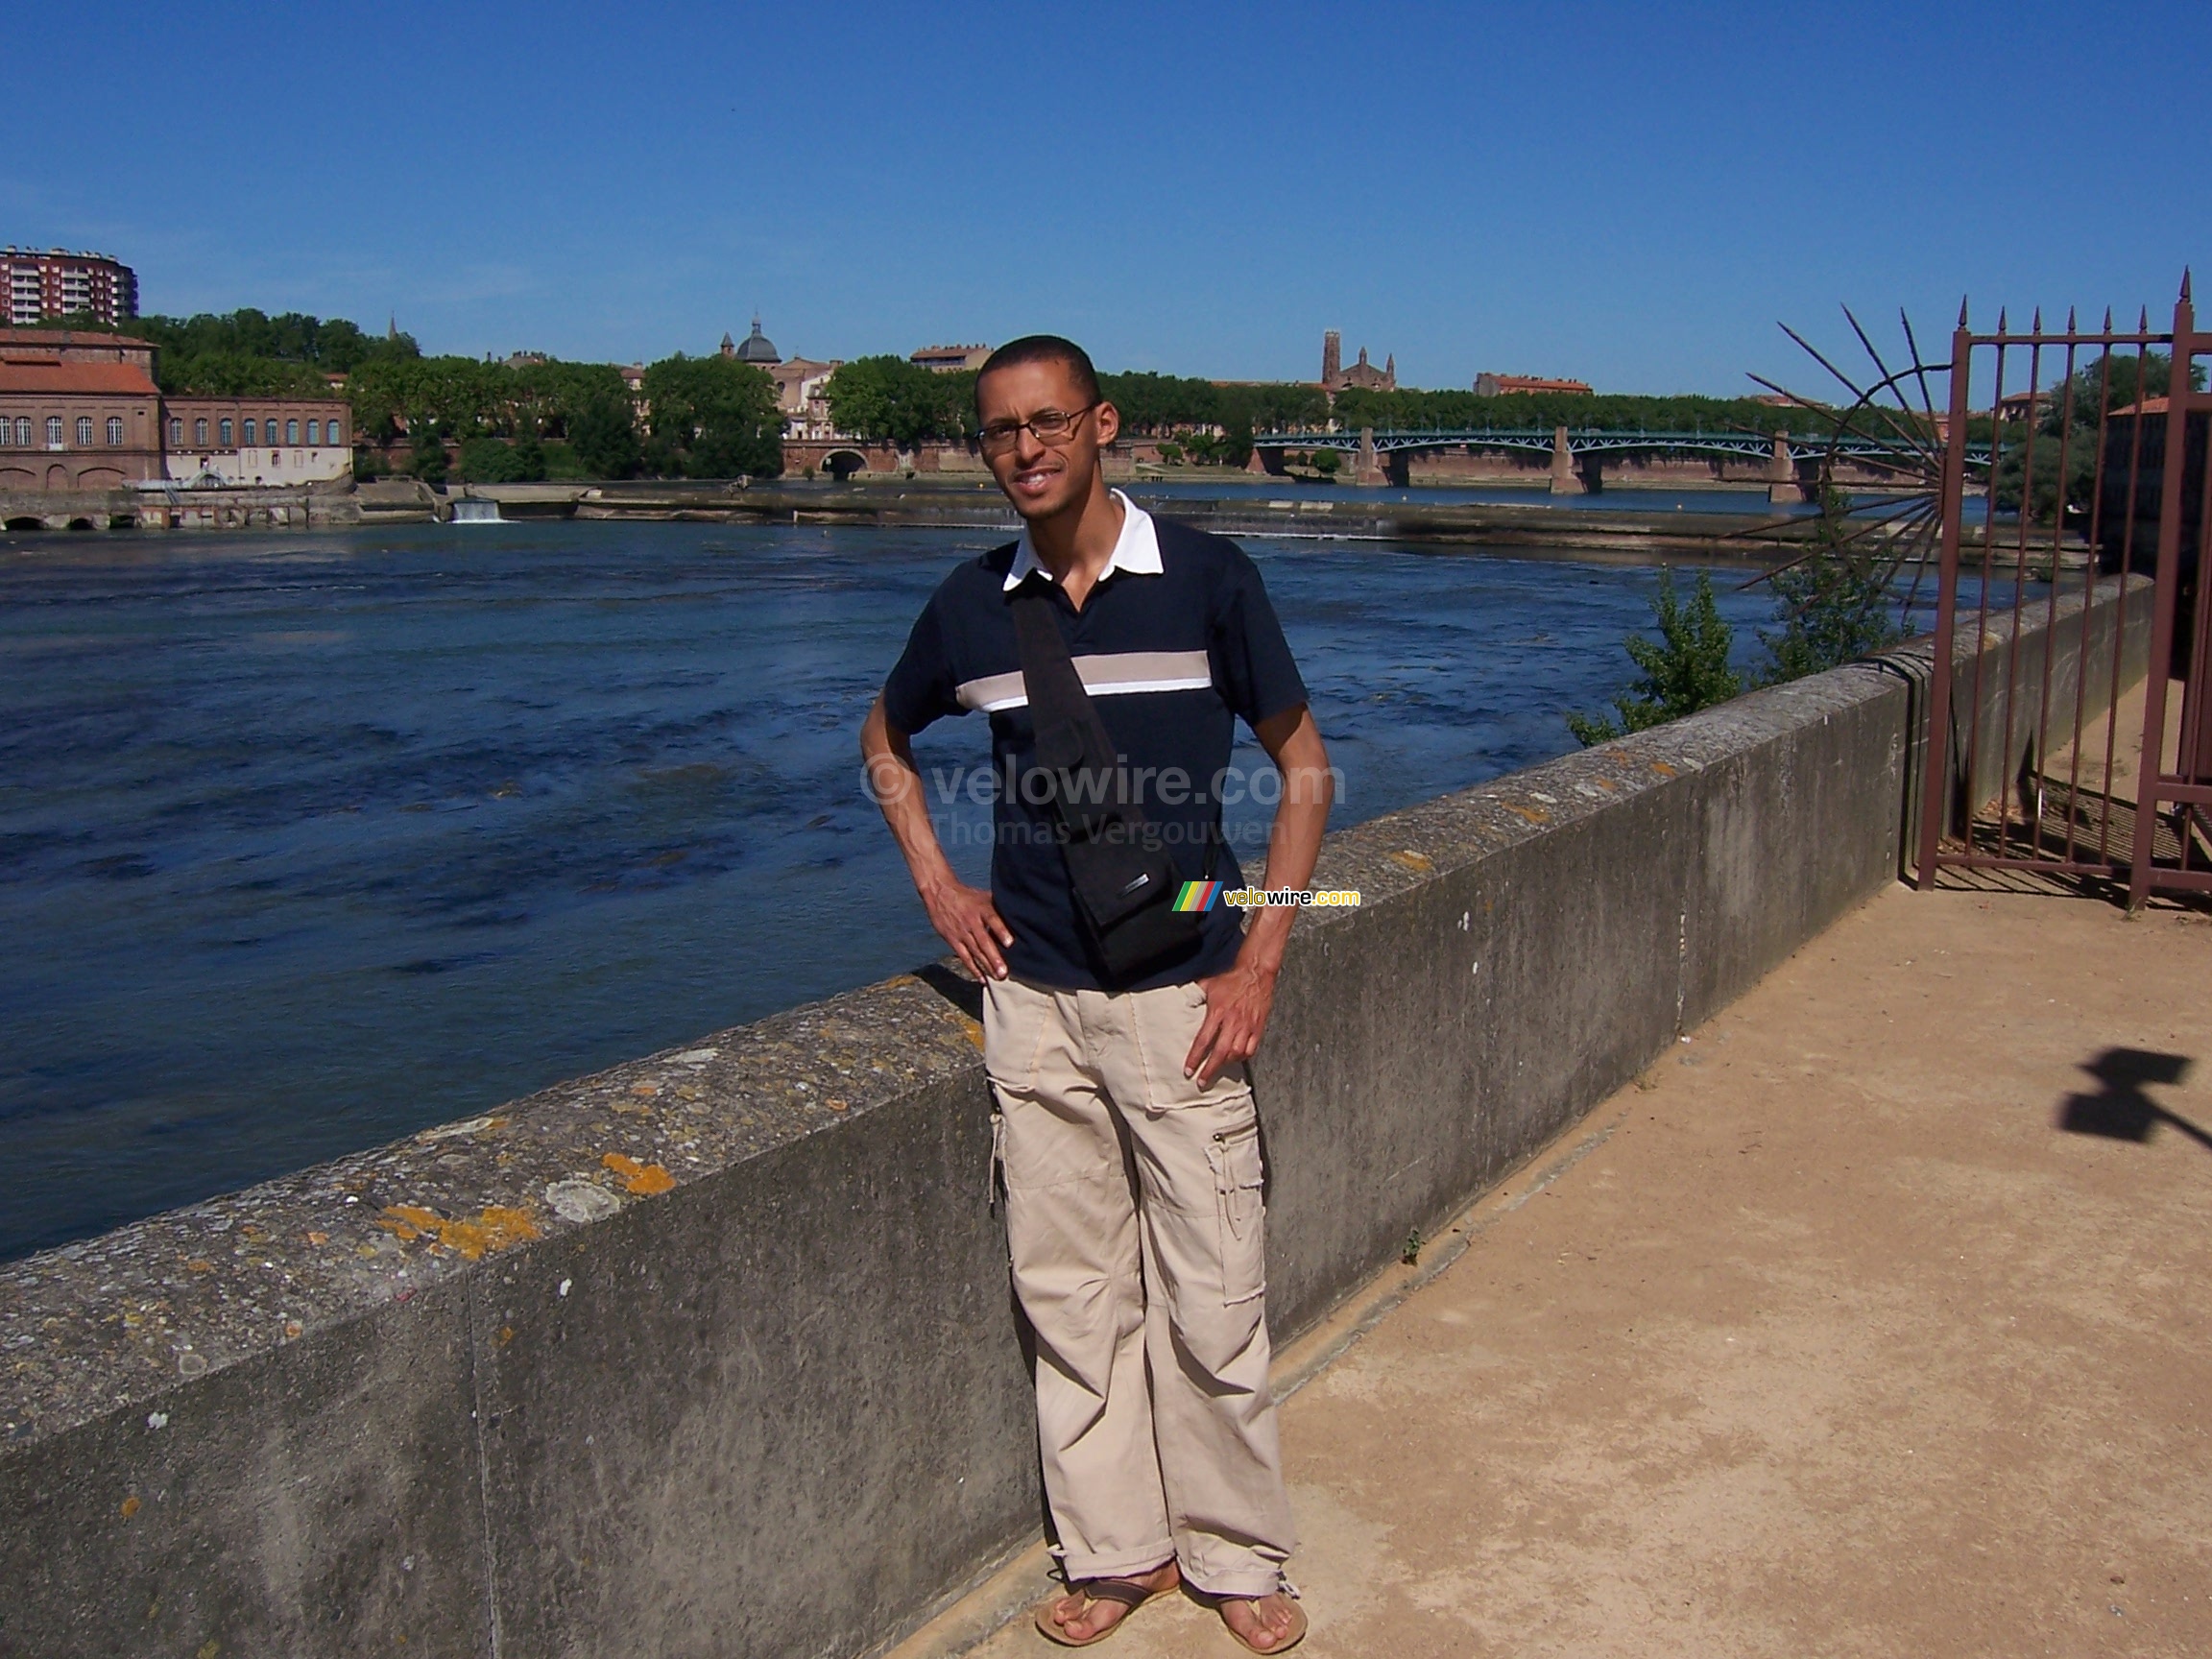 Rachid in front of the Garonne